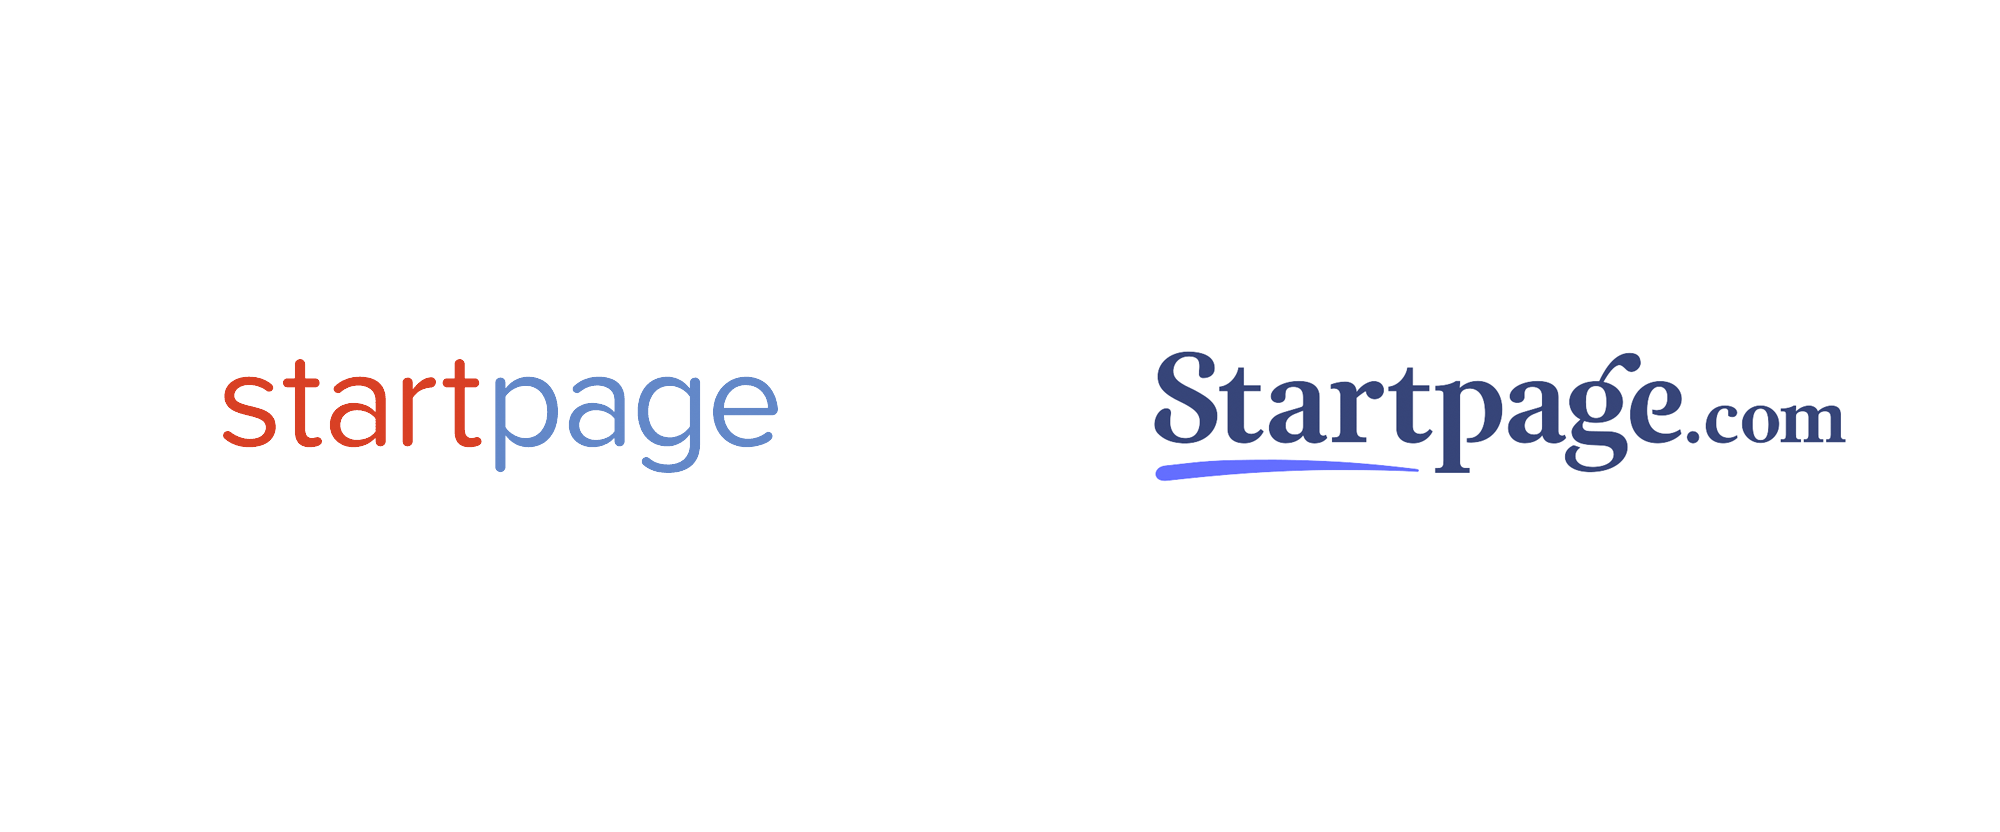 New Logo for Startpage.com